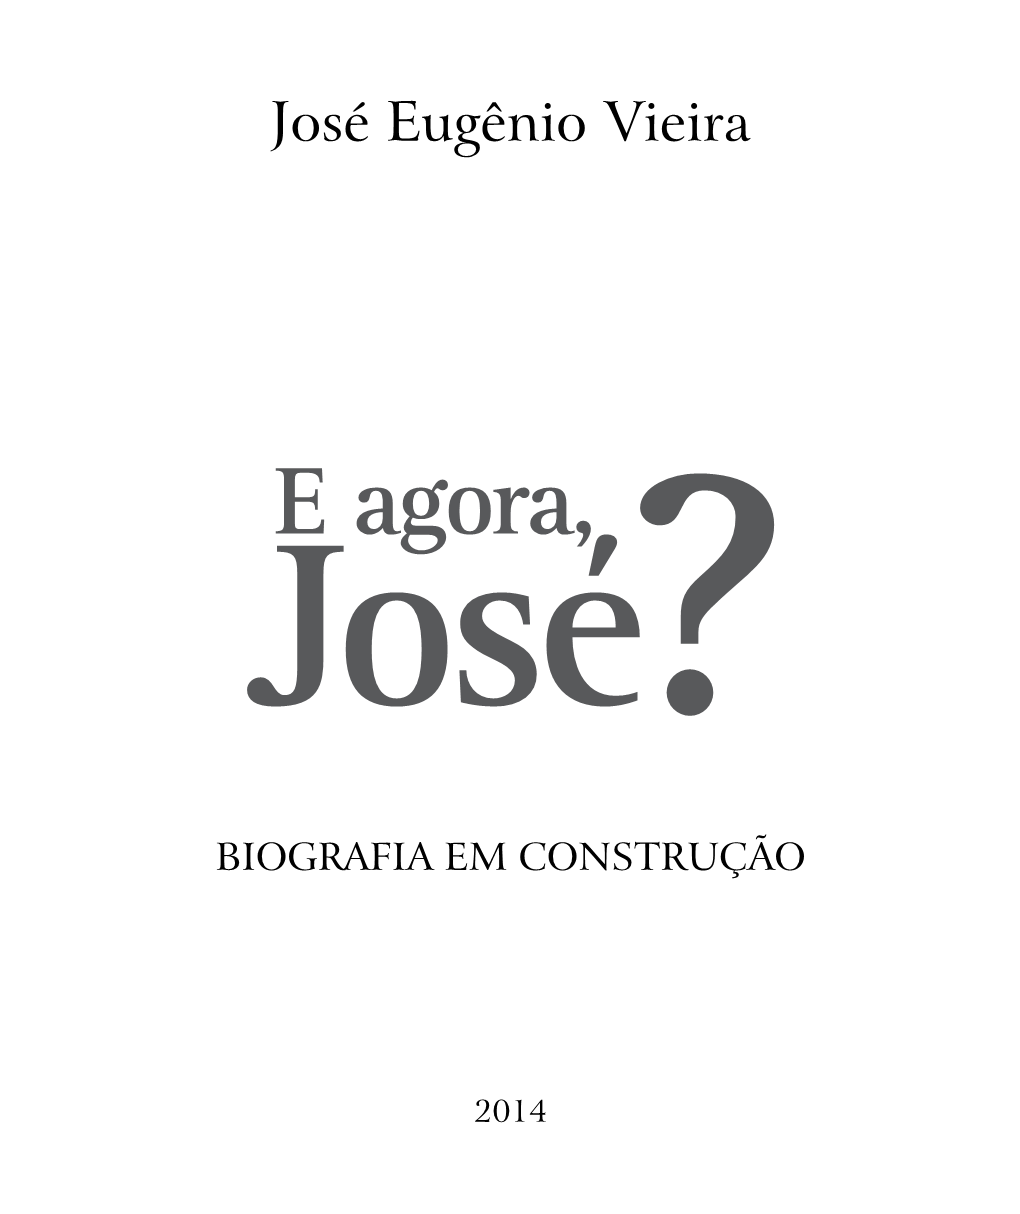 José Eugênio Vieira